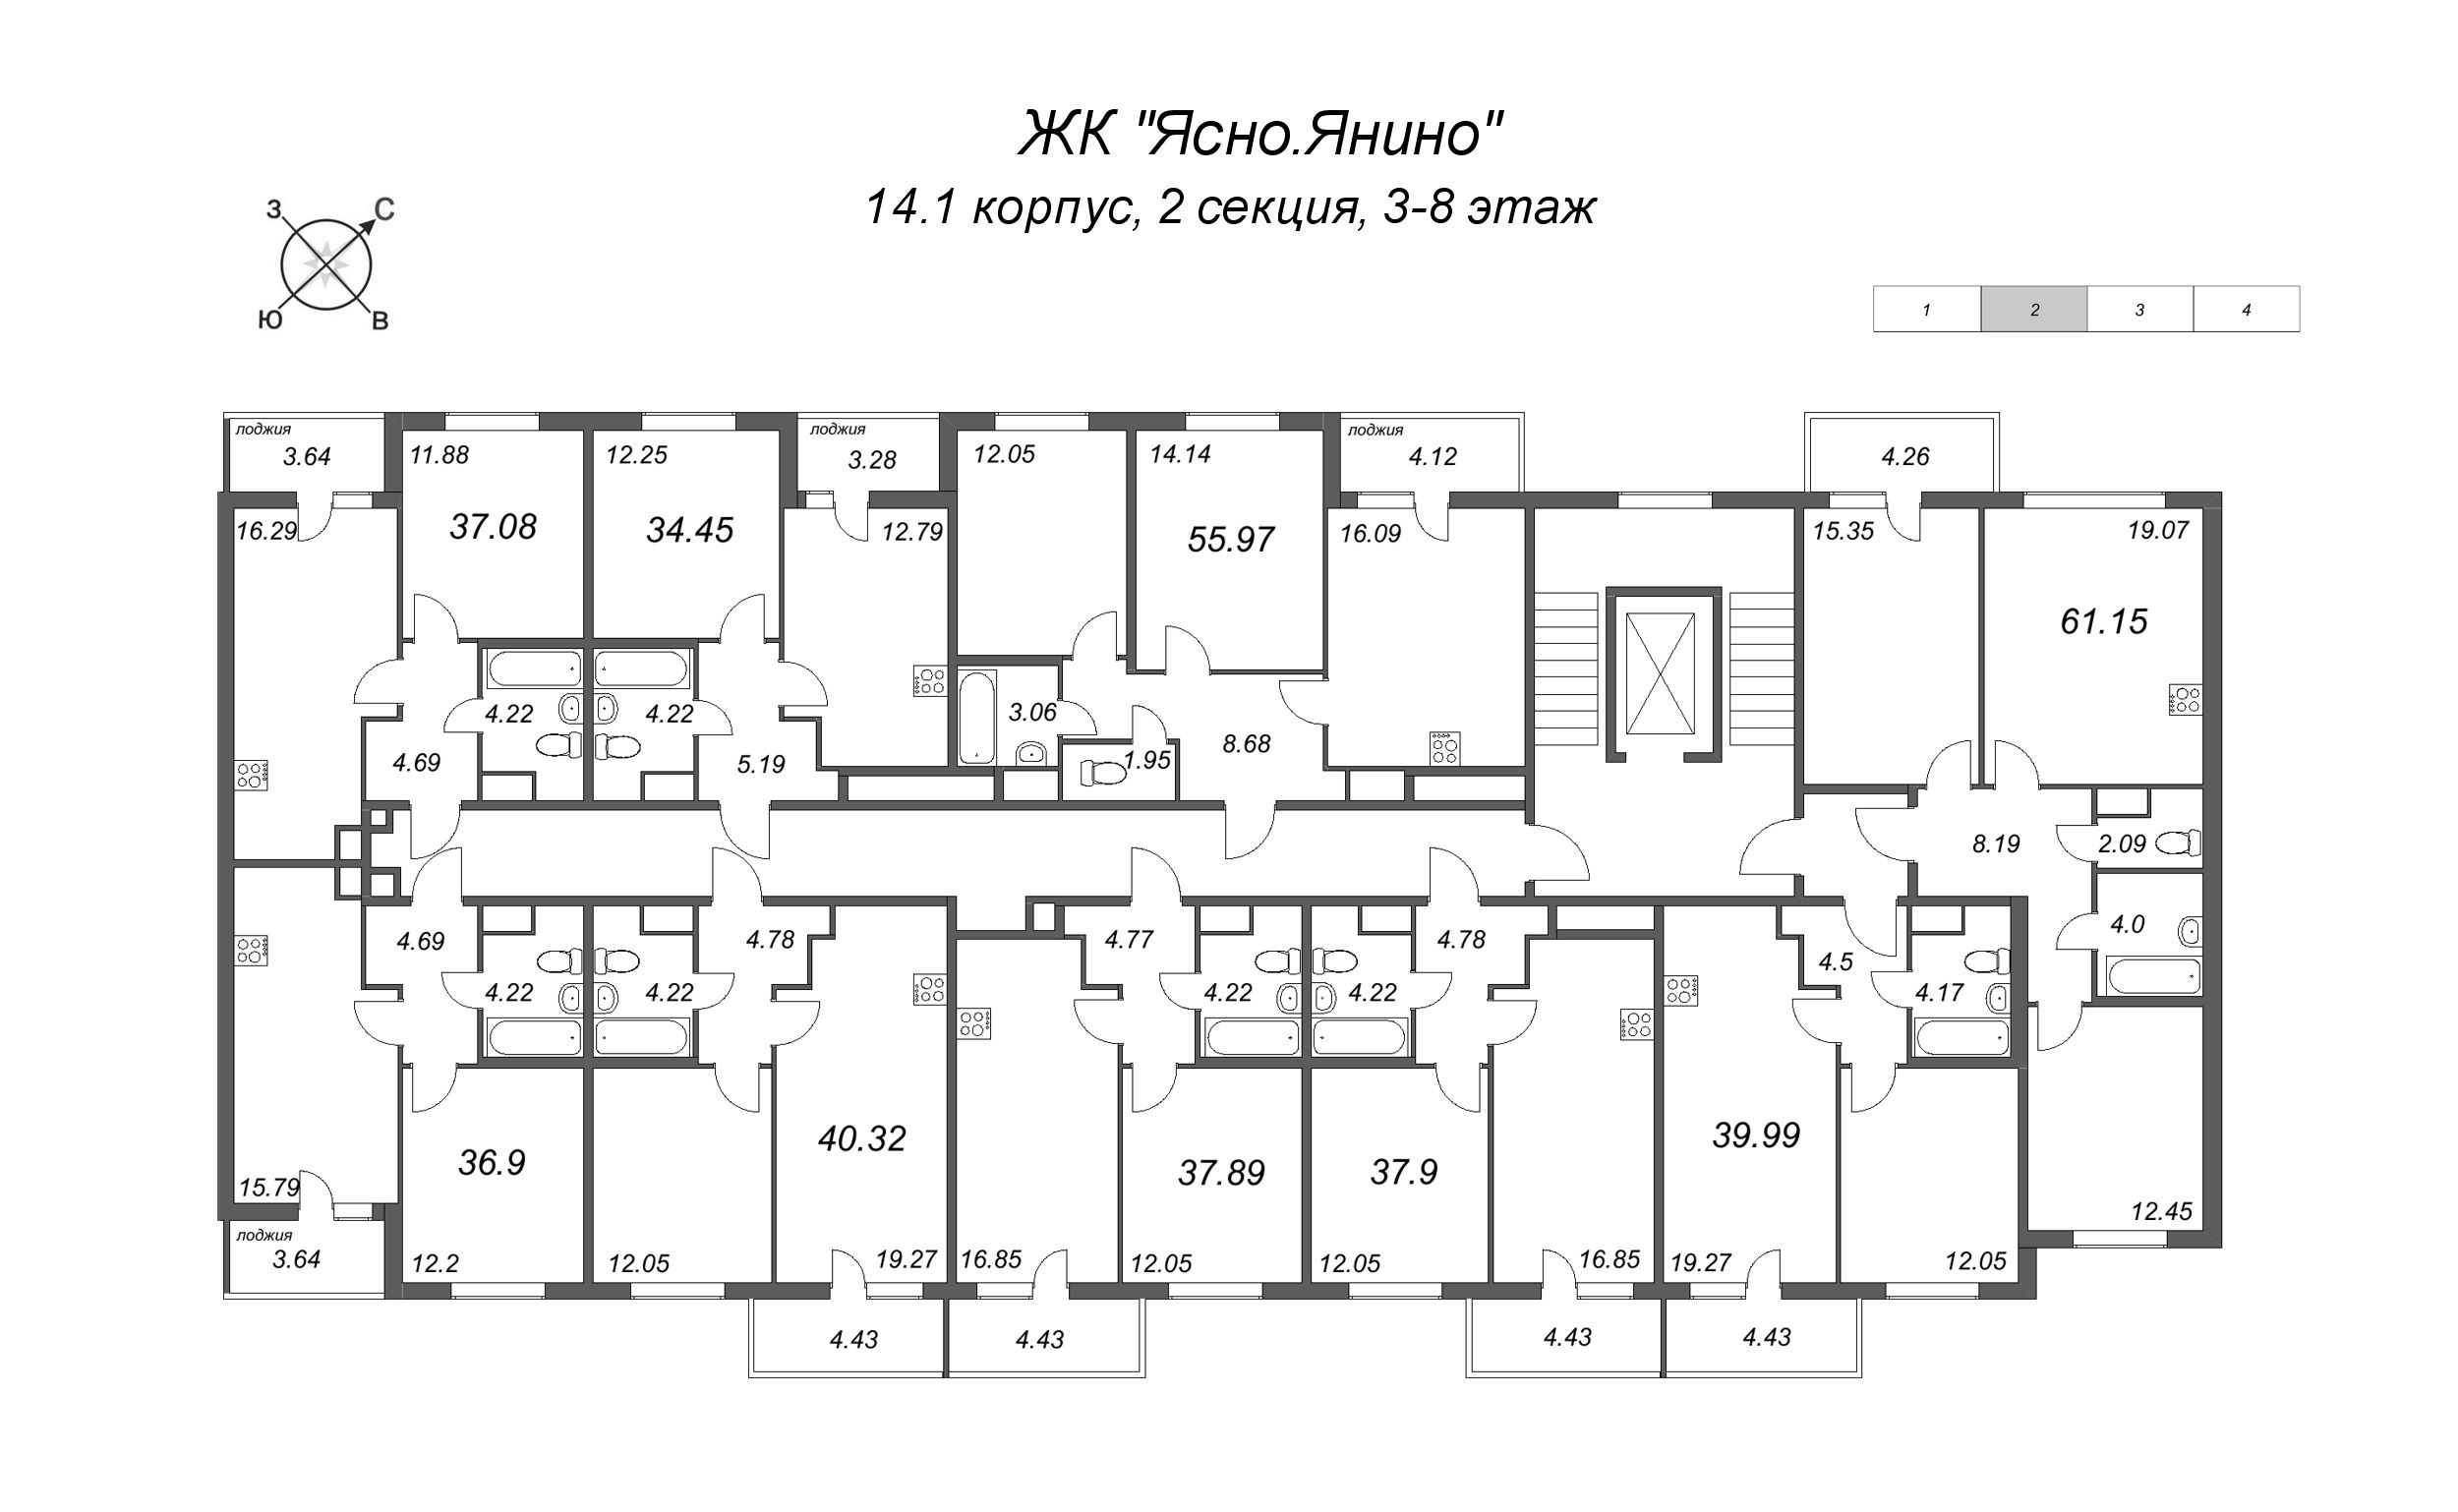 1-комнатная квартира, 34.45 м² в ЖК "Ясно.Янино" - планировка этажа